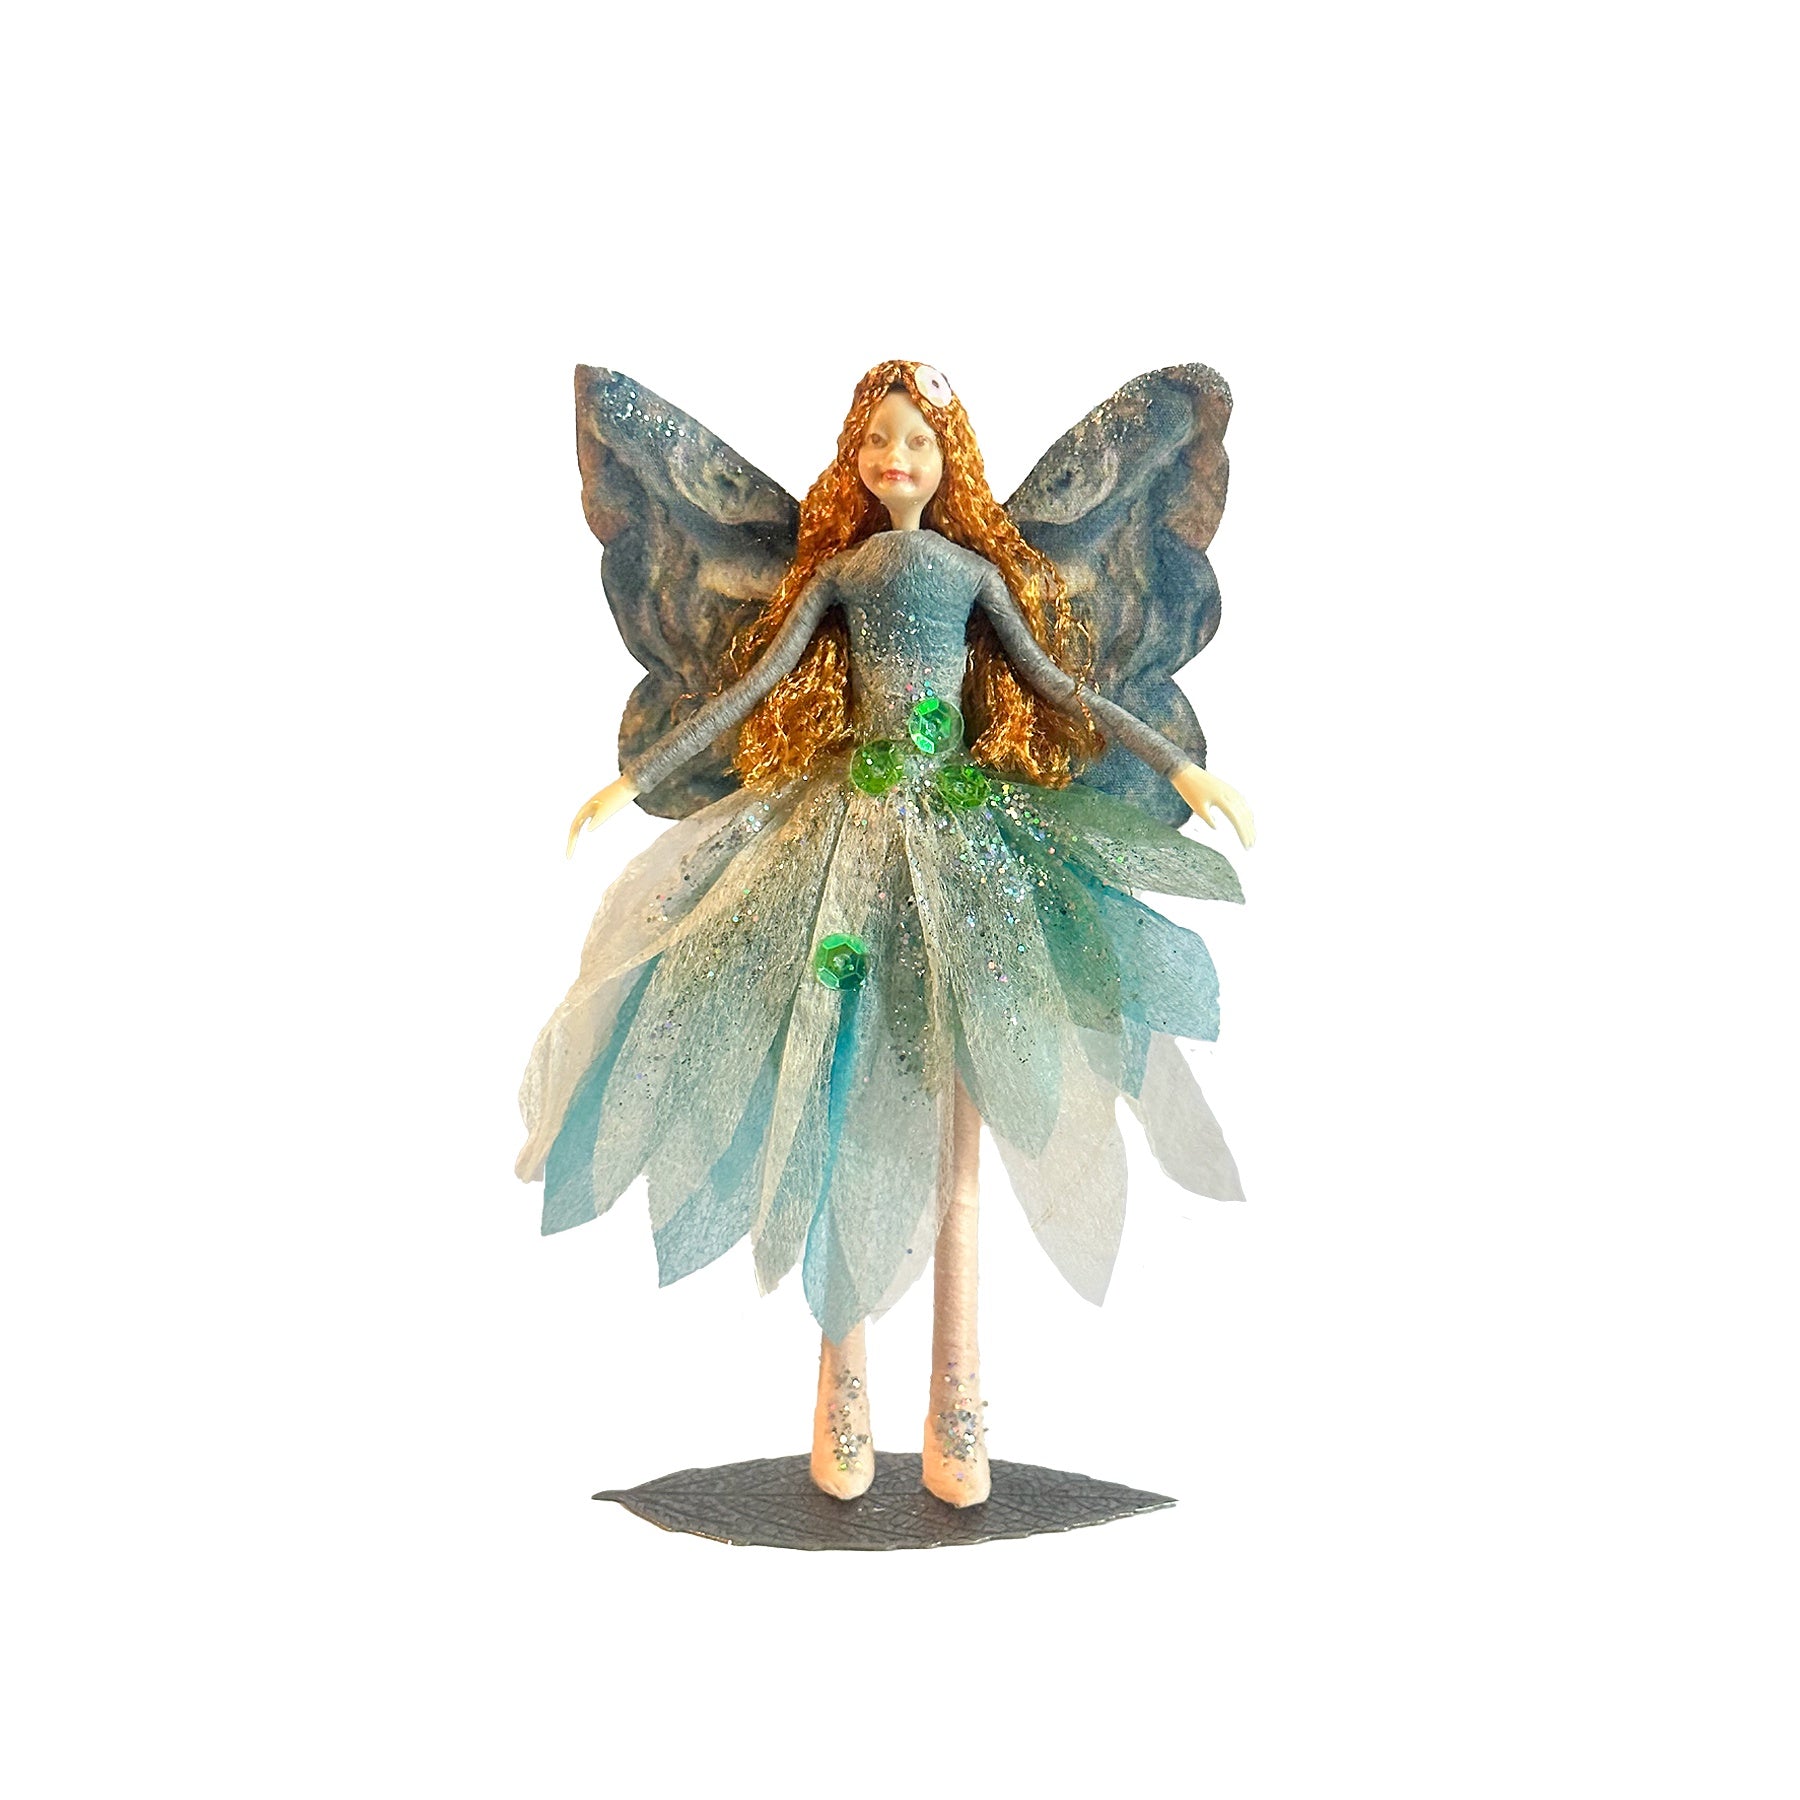 Celestia the Fairy